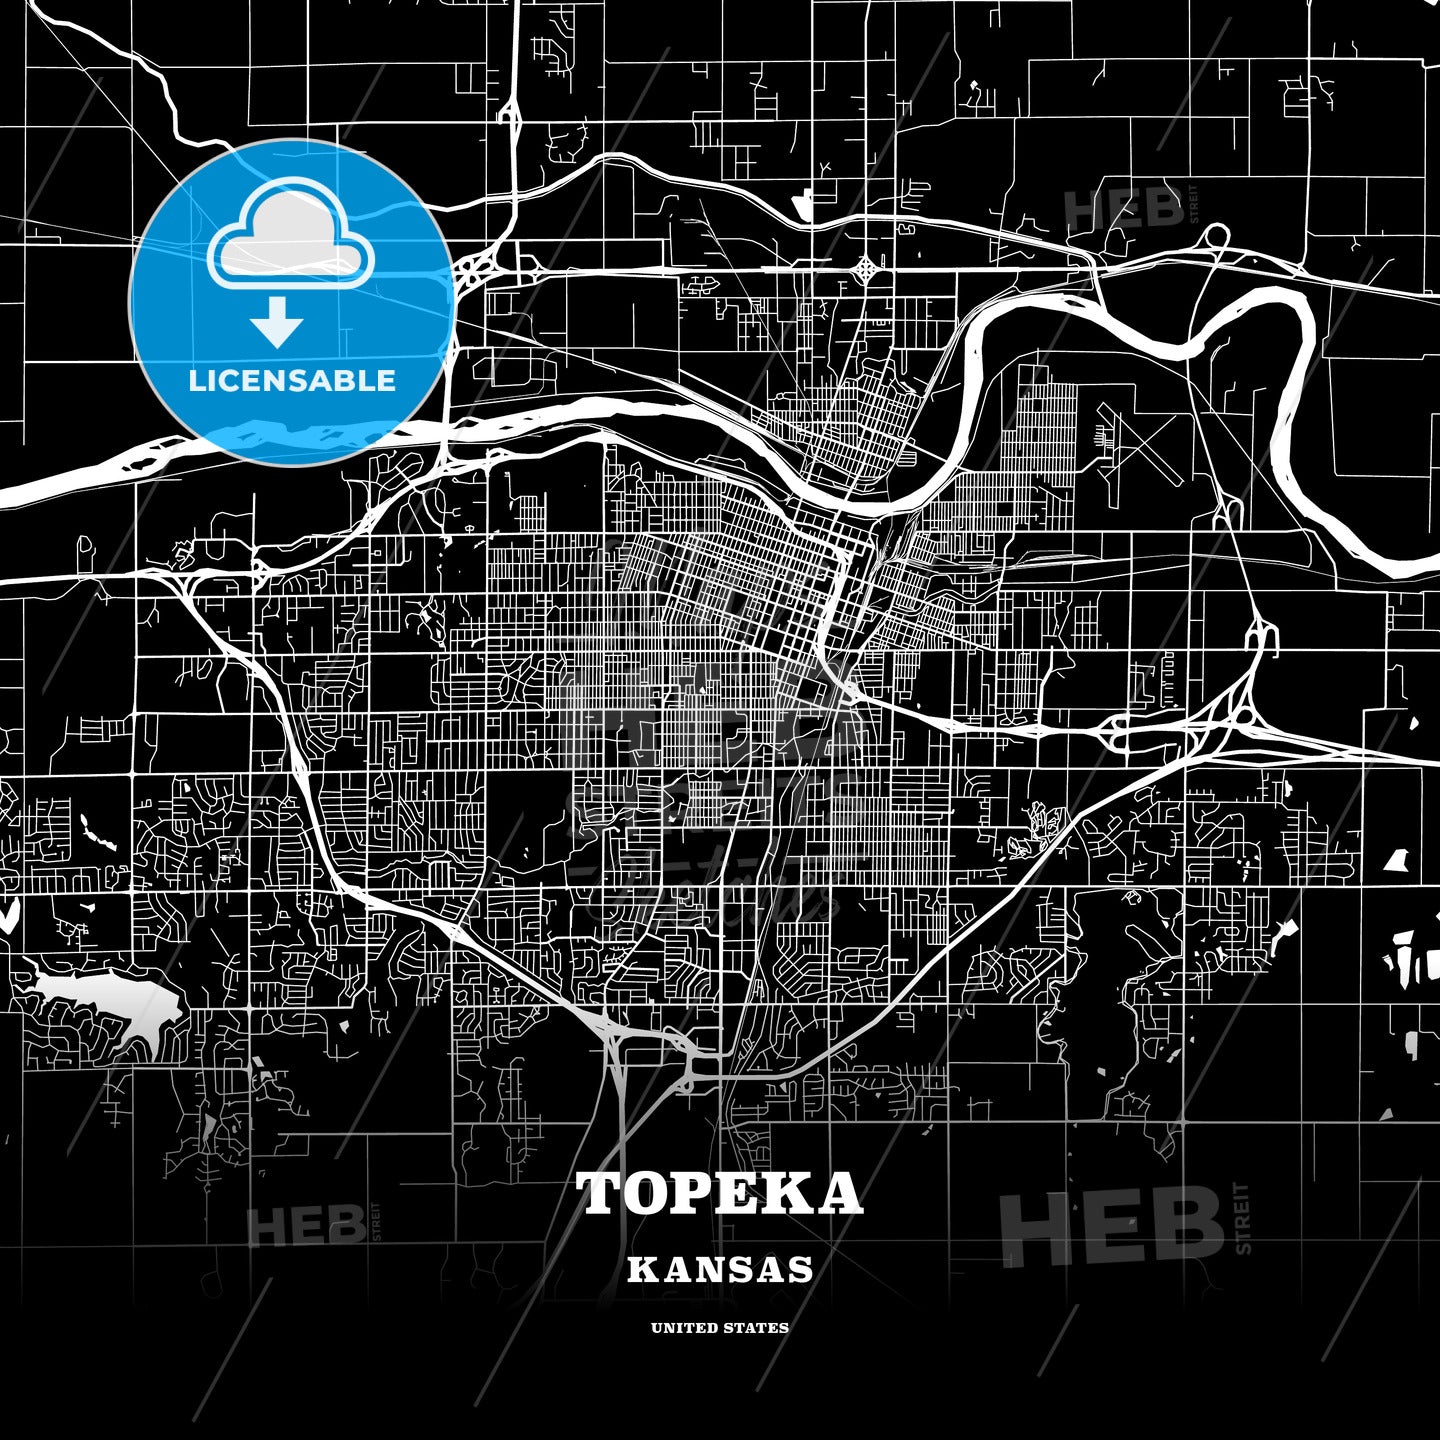 Topeka, Kansas, USA map